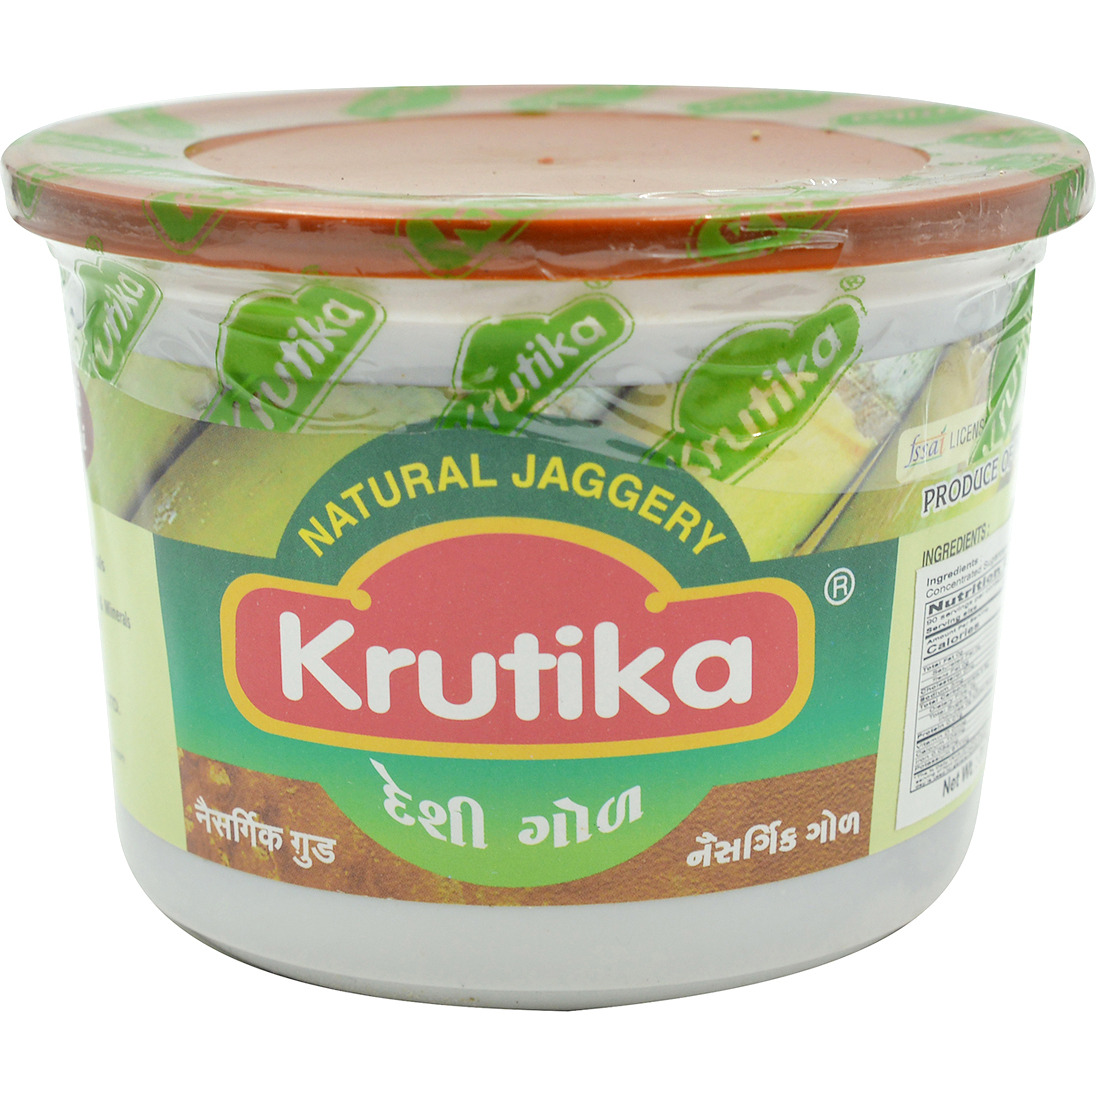 Case of 12 - Krutika Natural Jaggery - 1 Kg (2.2 Lb)